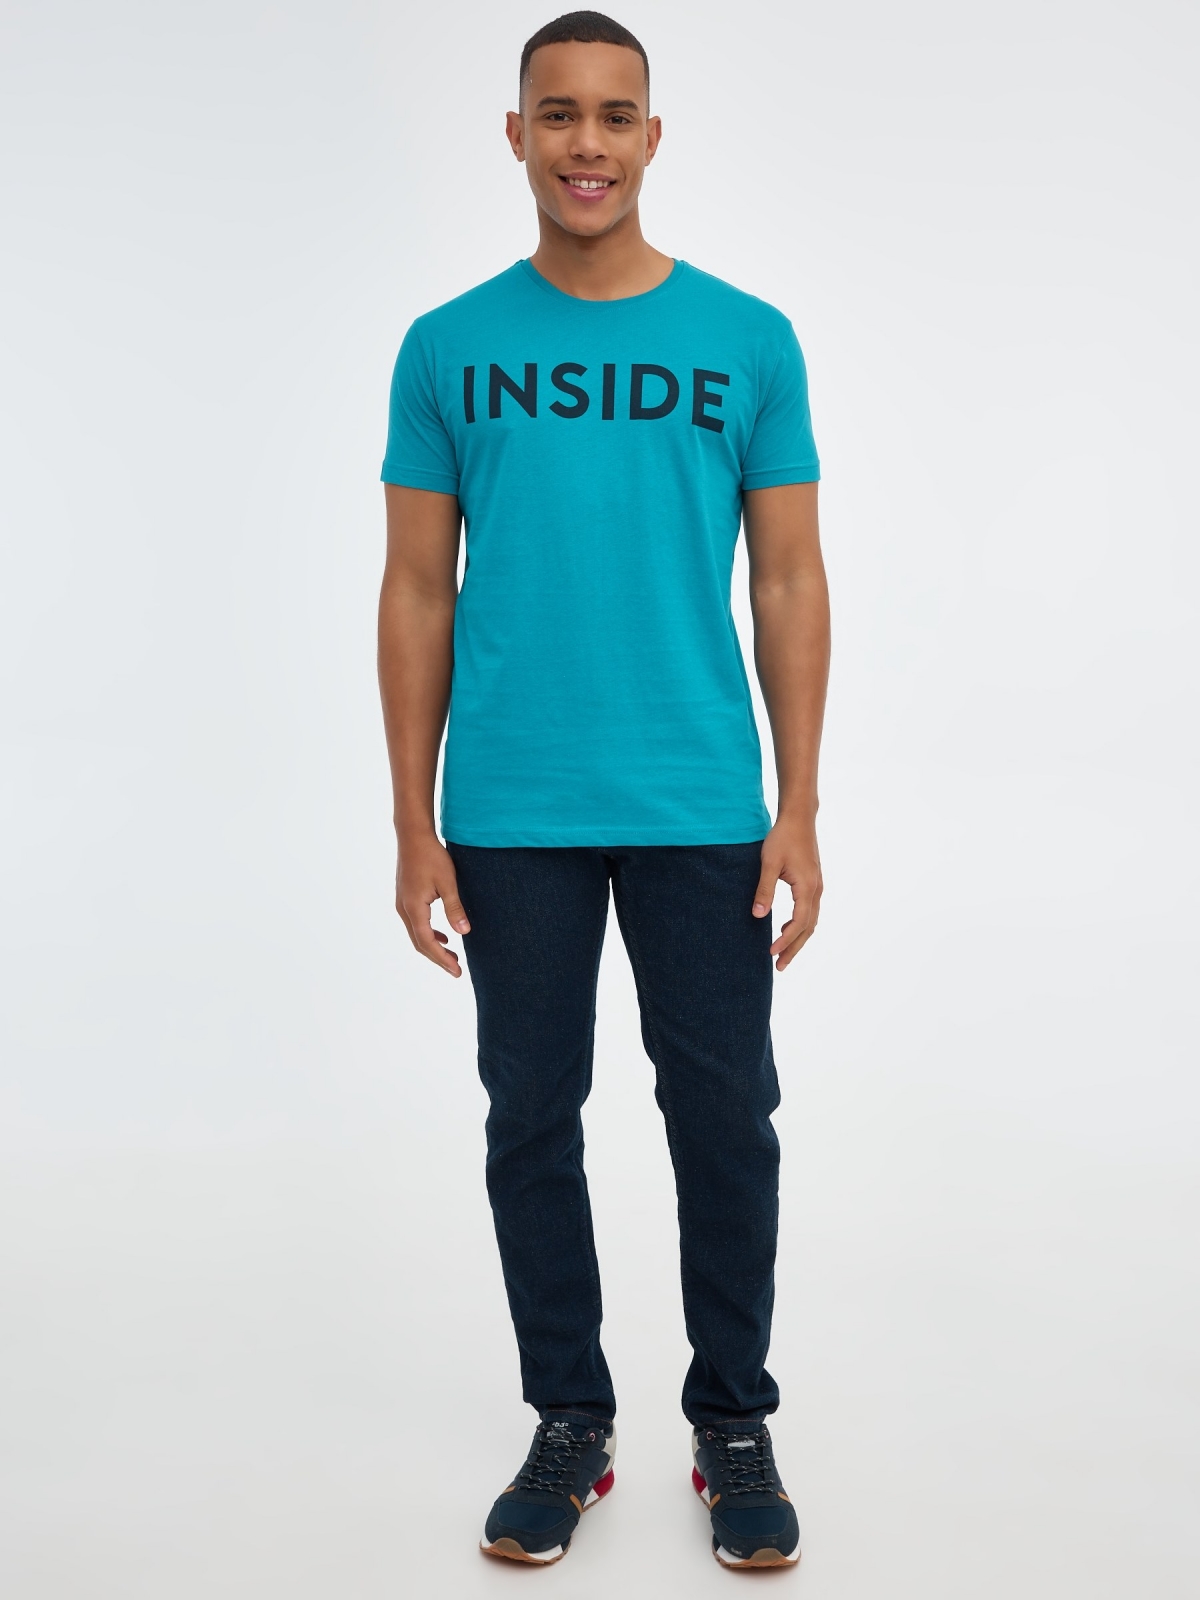 Camiseta básica "INSIDE" azul vista general frontal